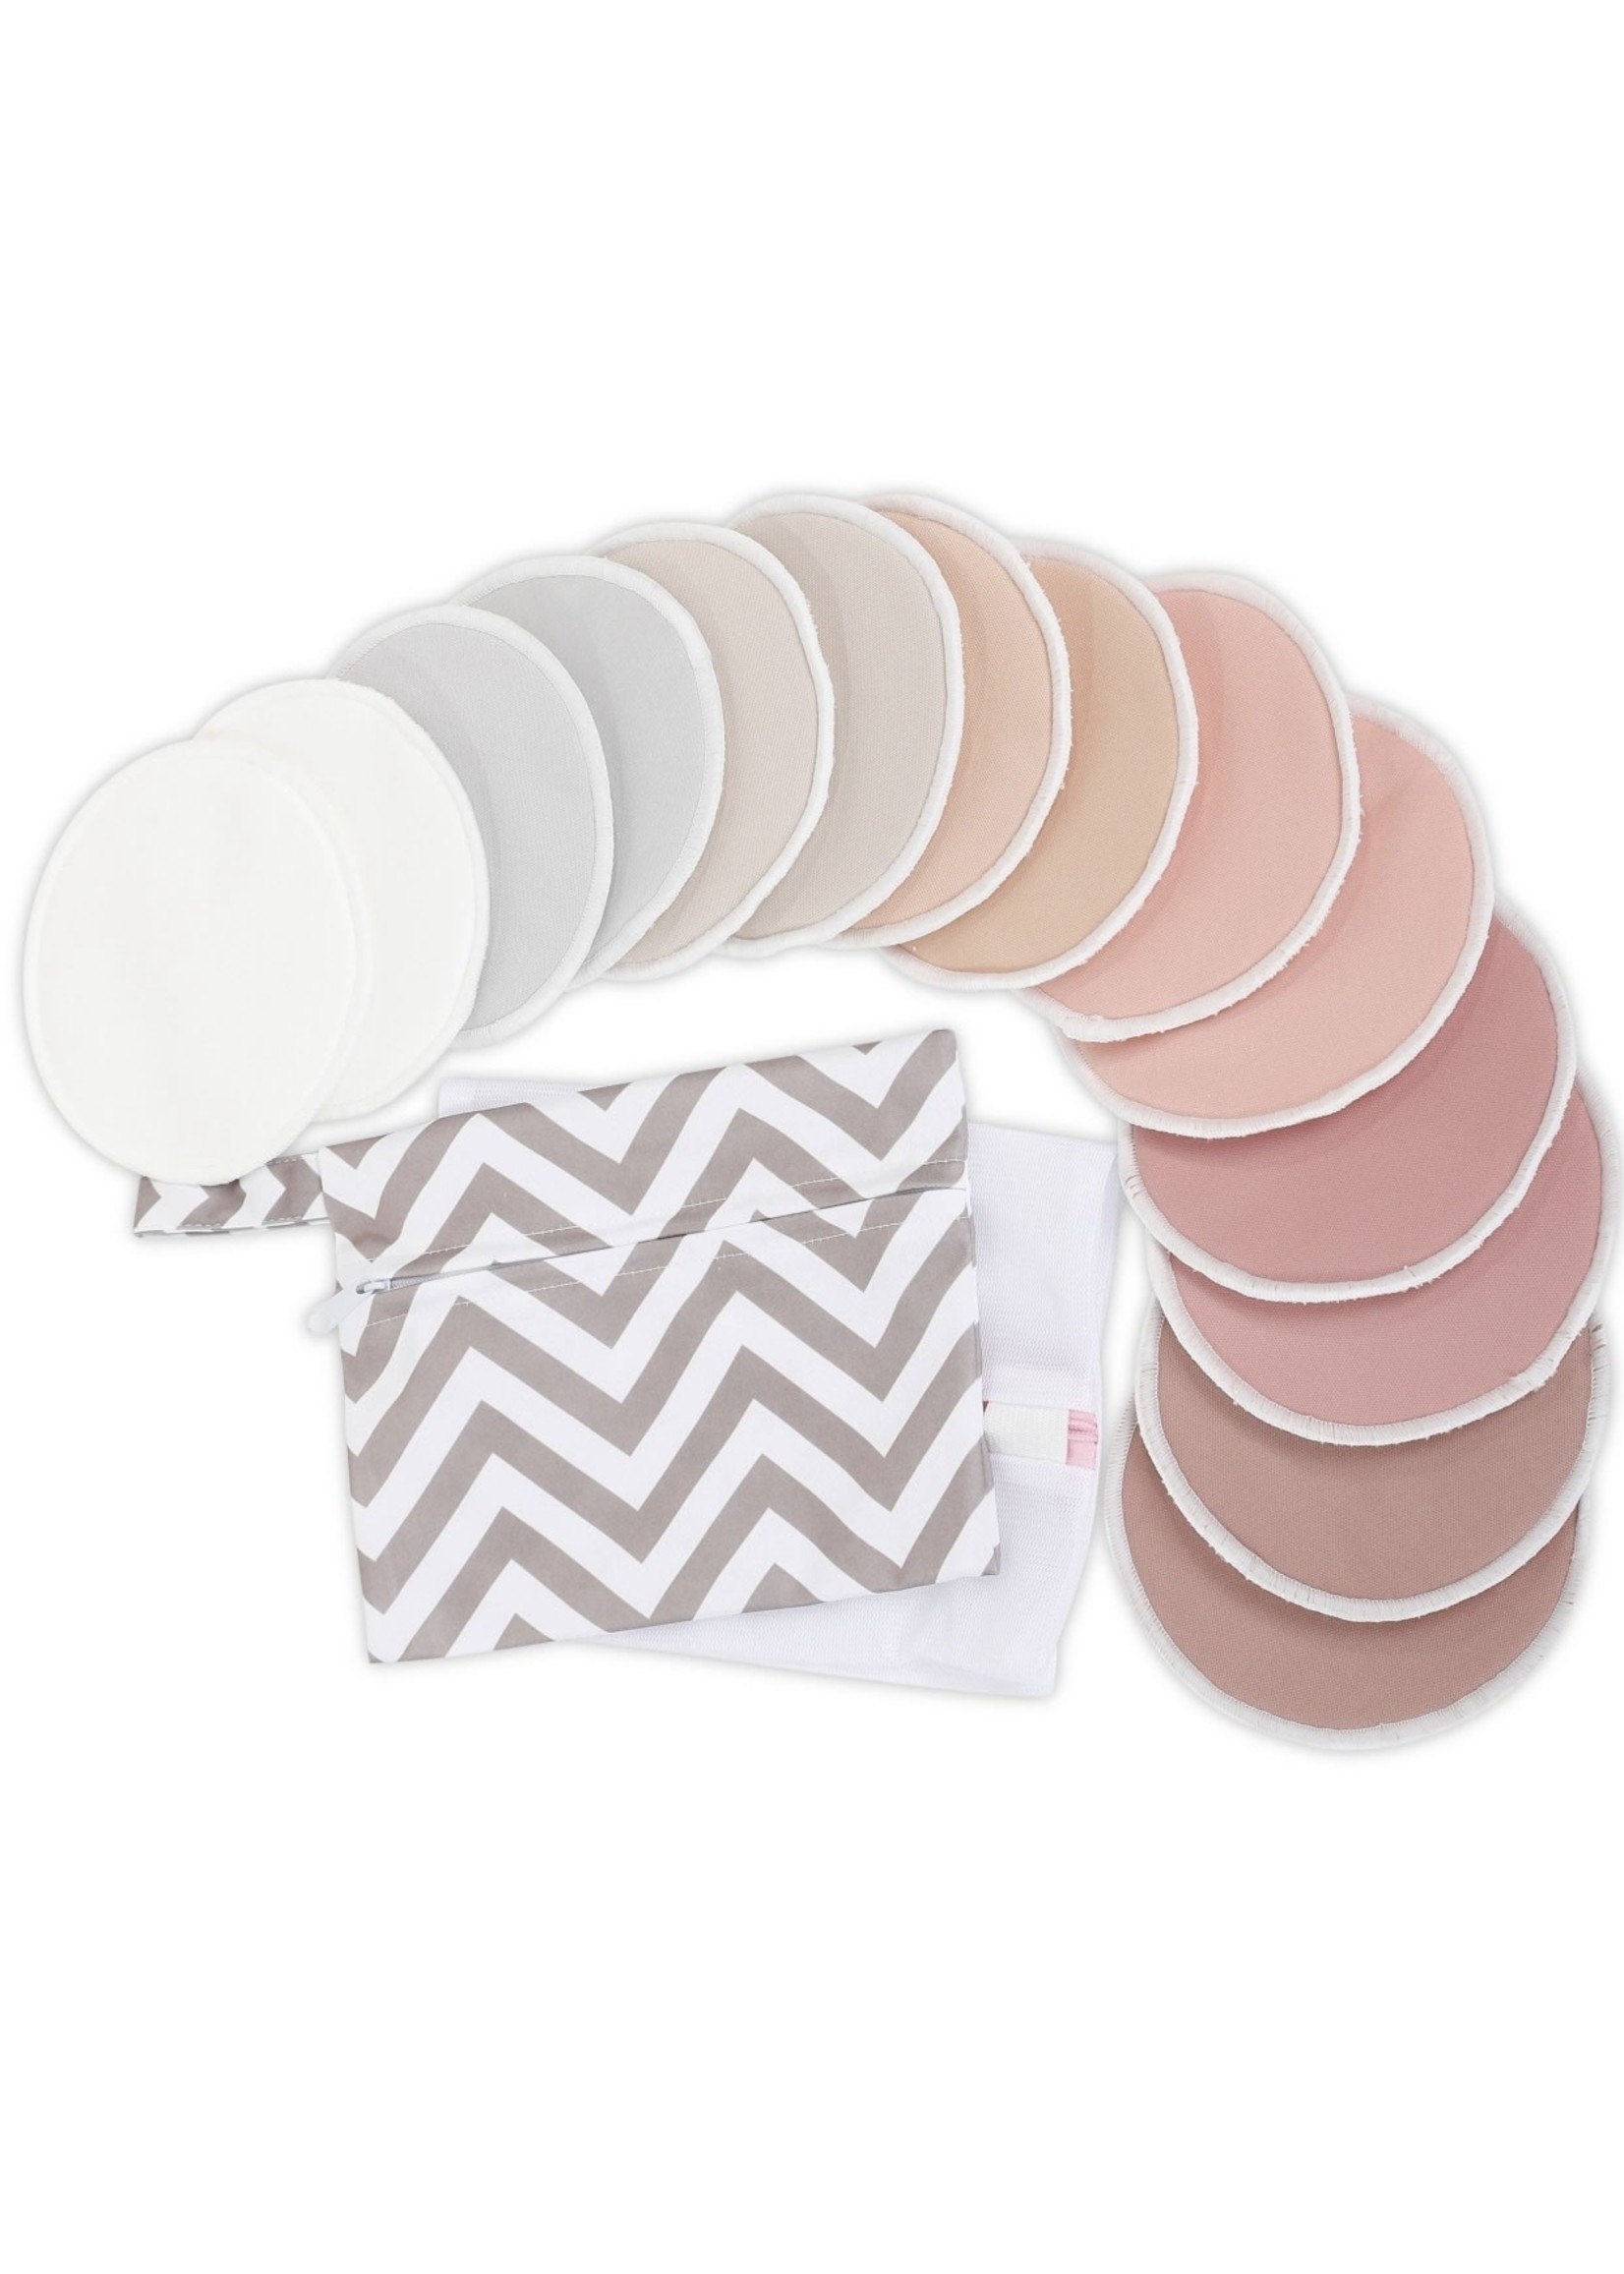 Kea Babies Pastel Comfy Nursing Pads XL